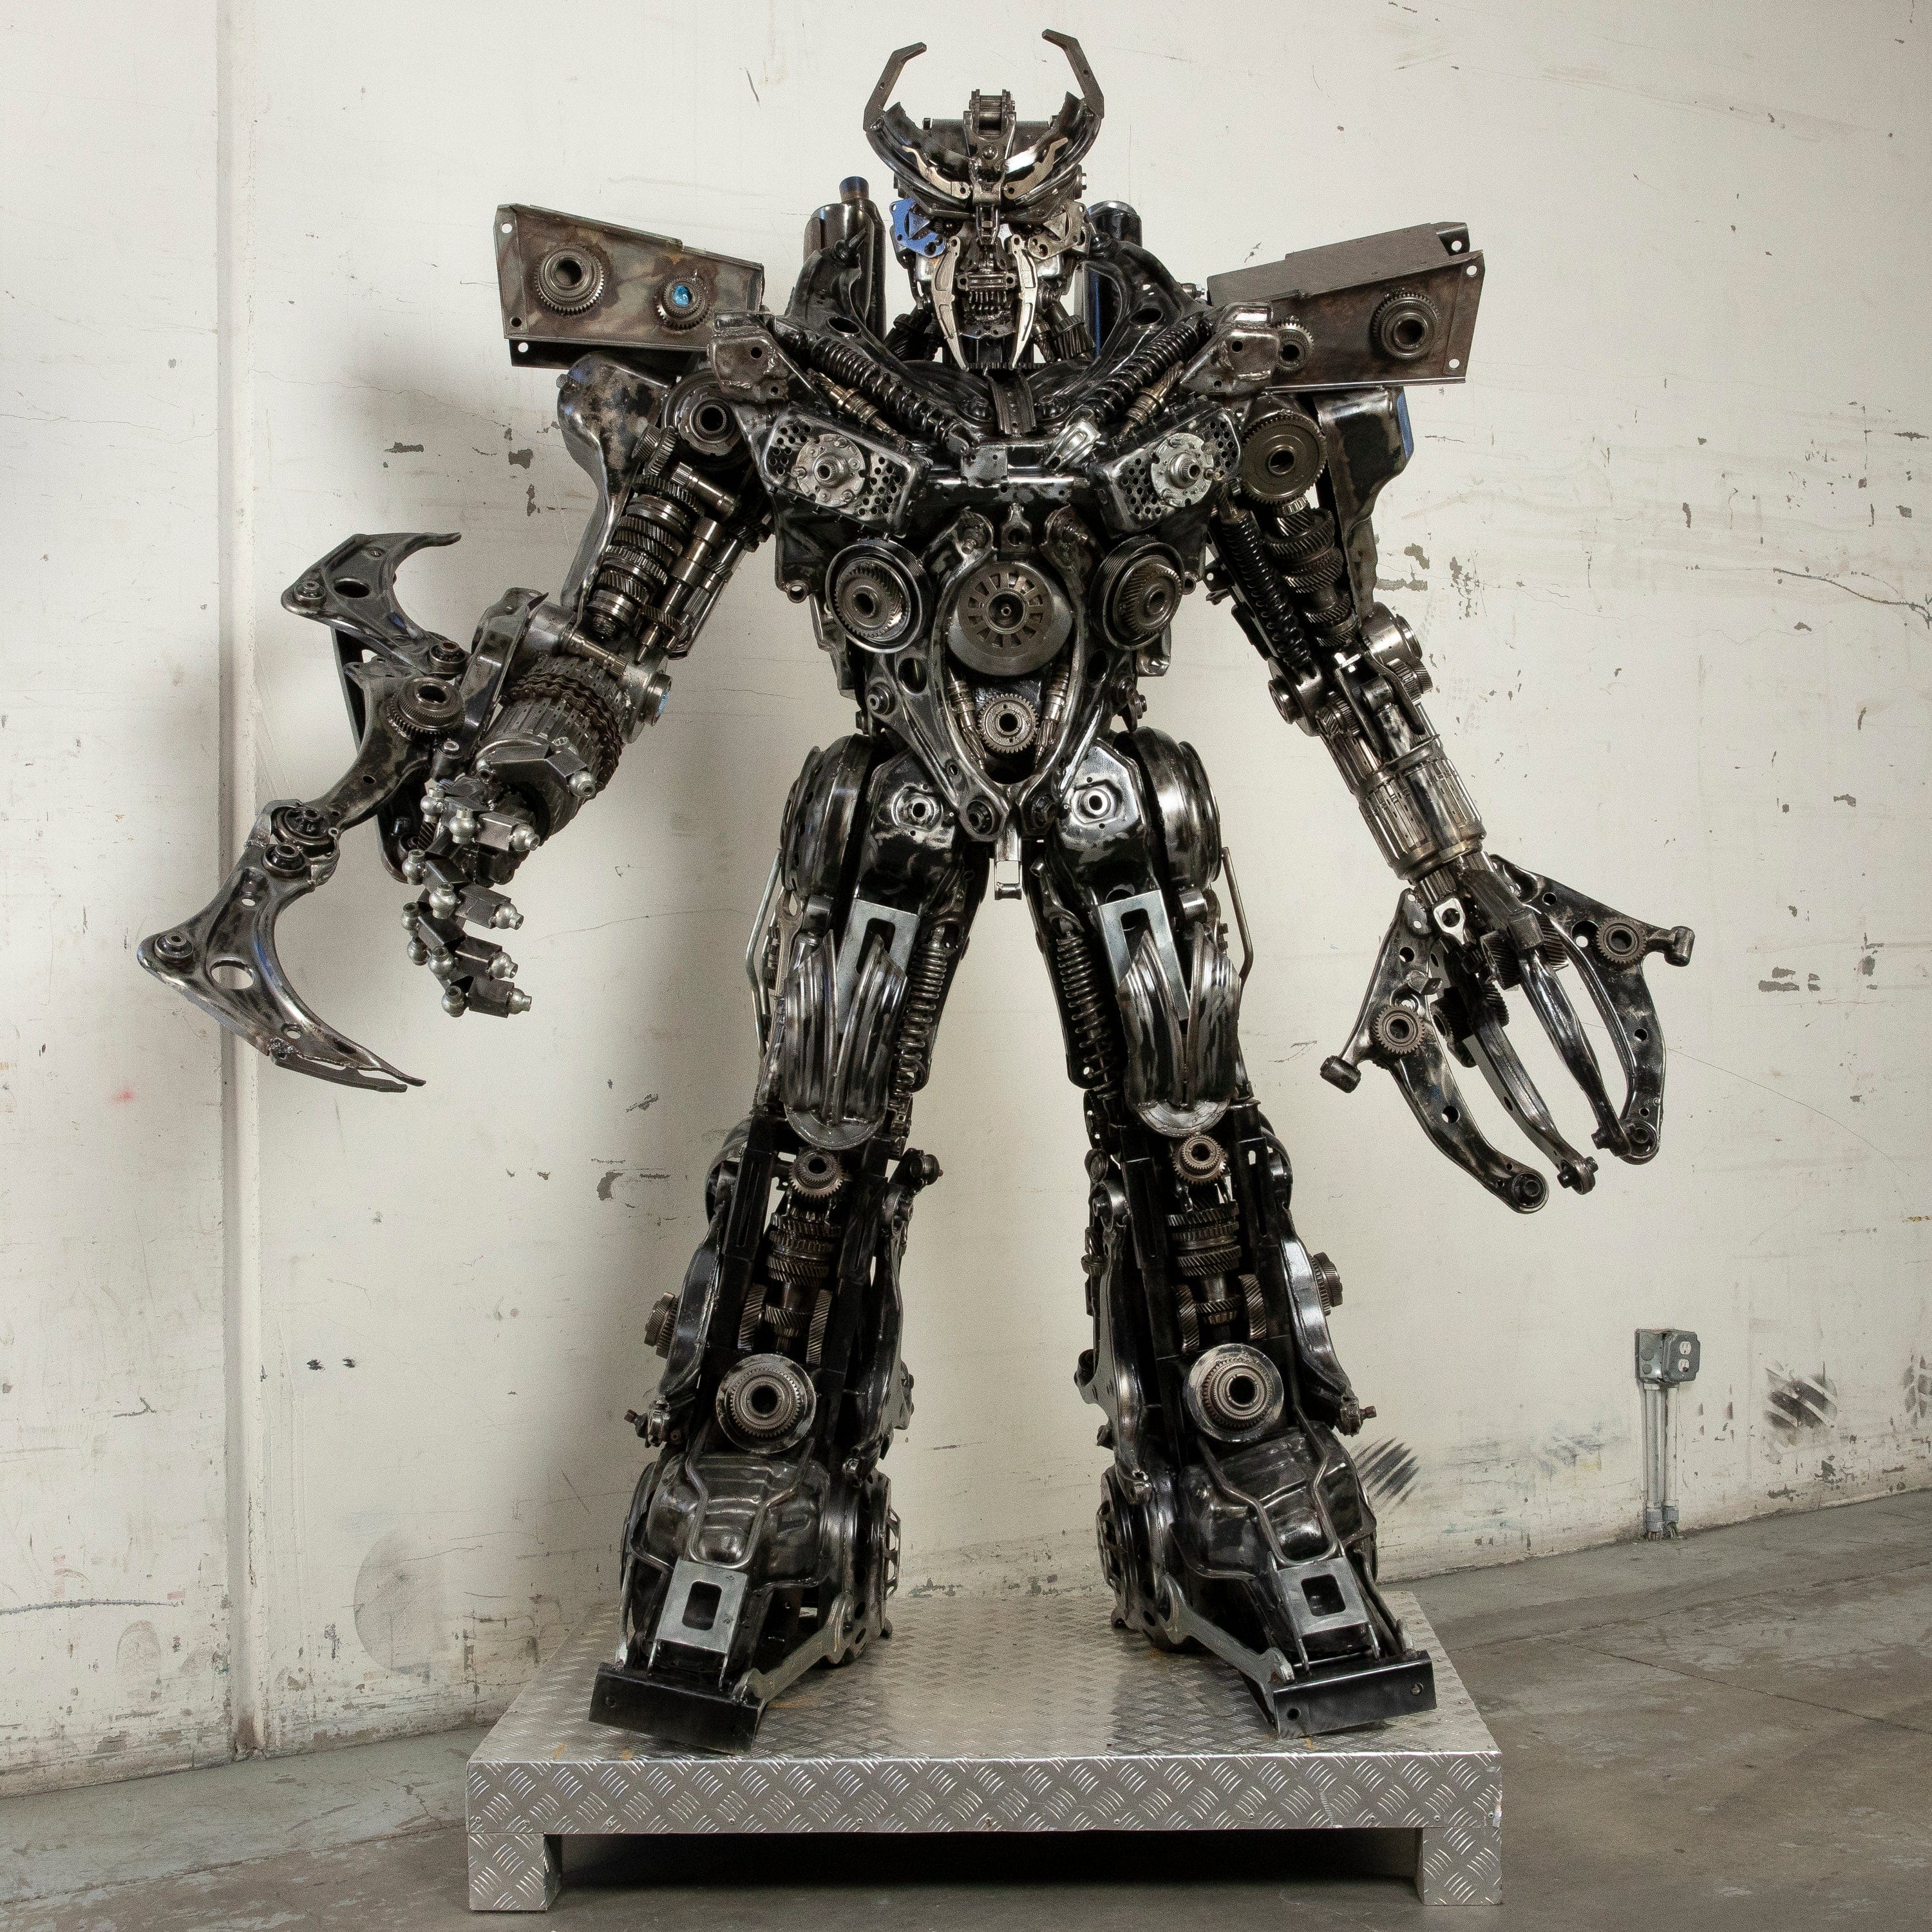 Kalifano Recycled Metal Art 91" Megatron Inspired Recycled Metal Art Sculpture RMS-MEG230-S05